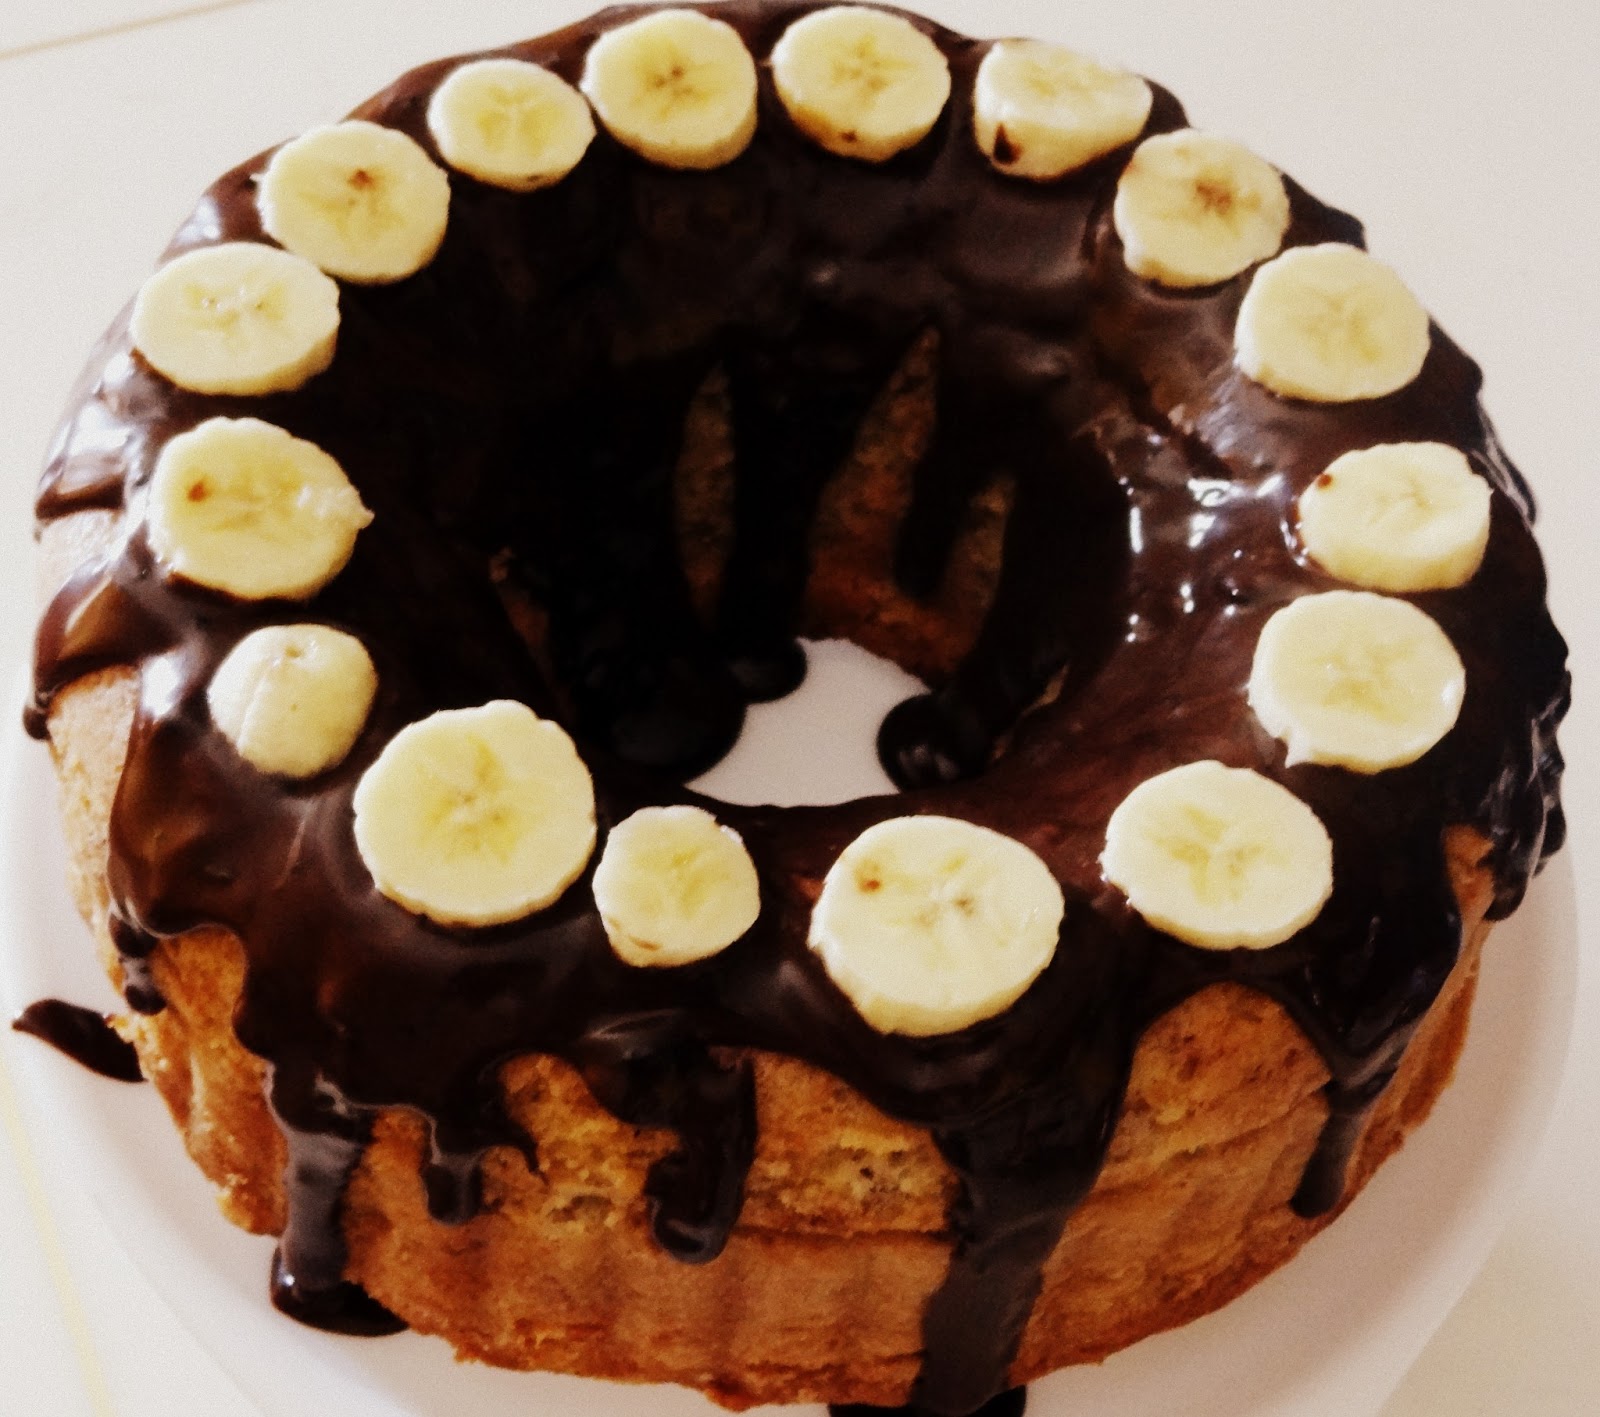 Chocolate Banana Bundt Cake